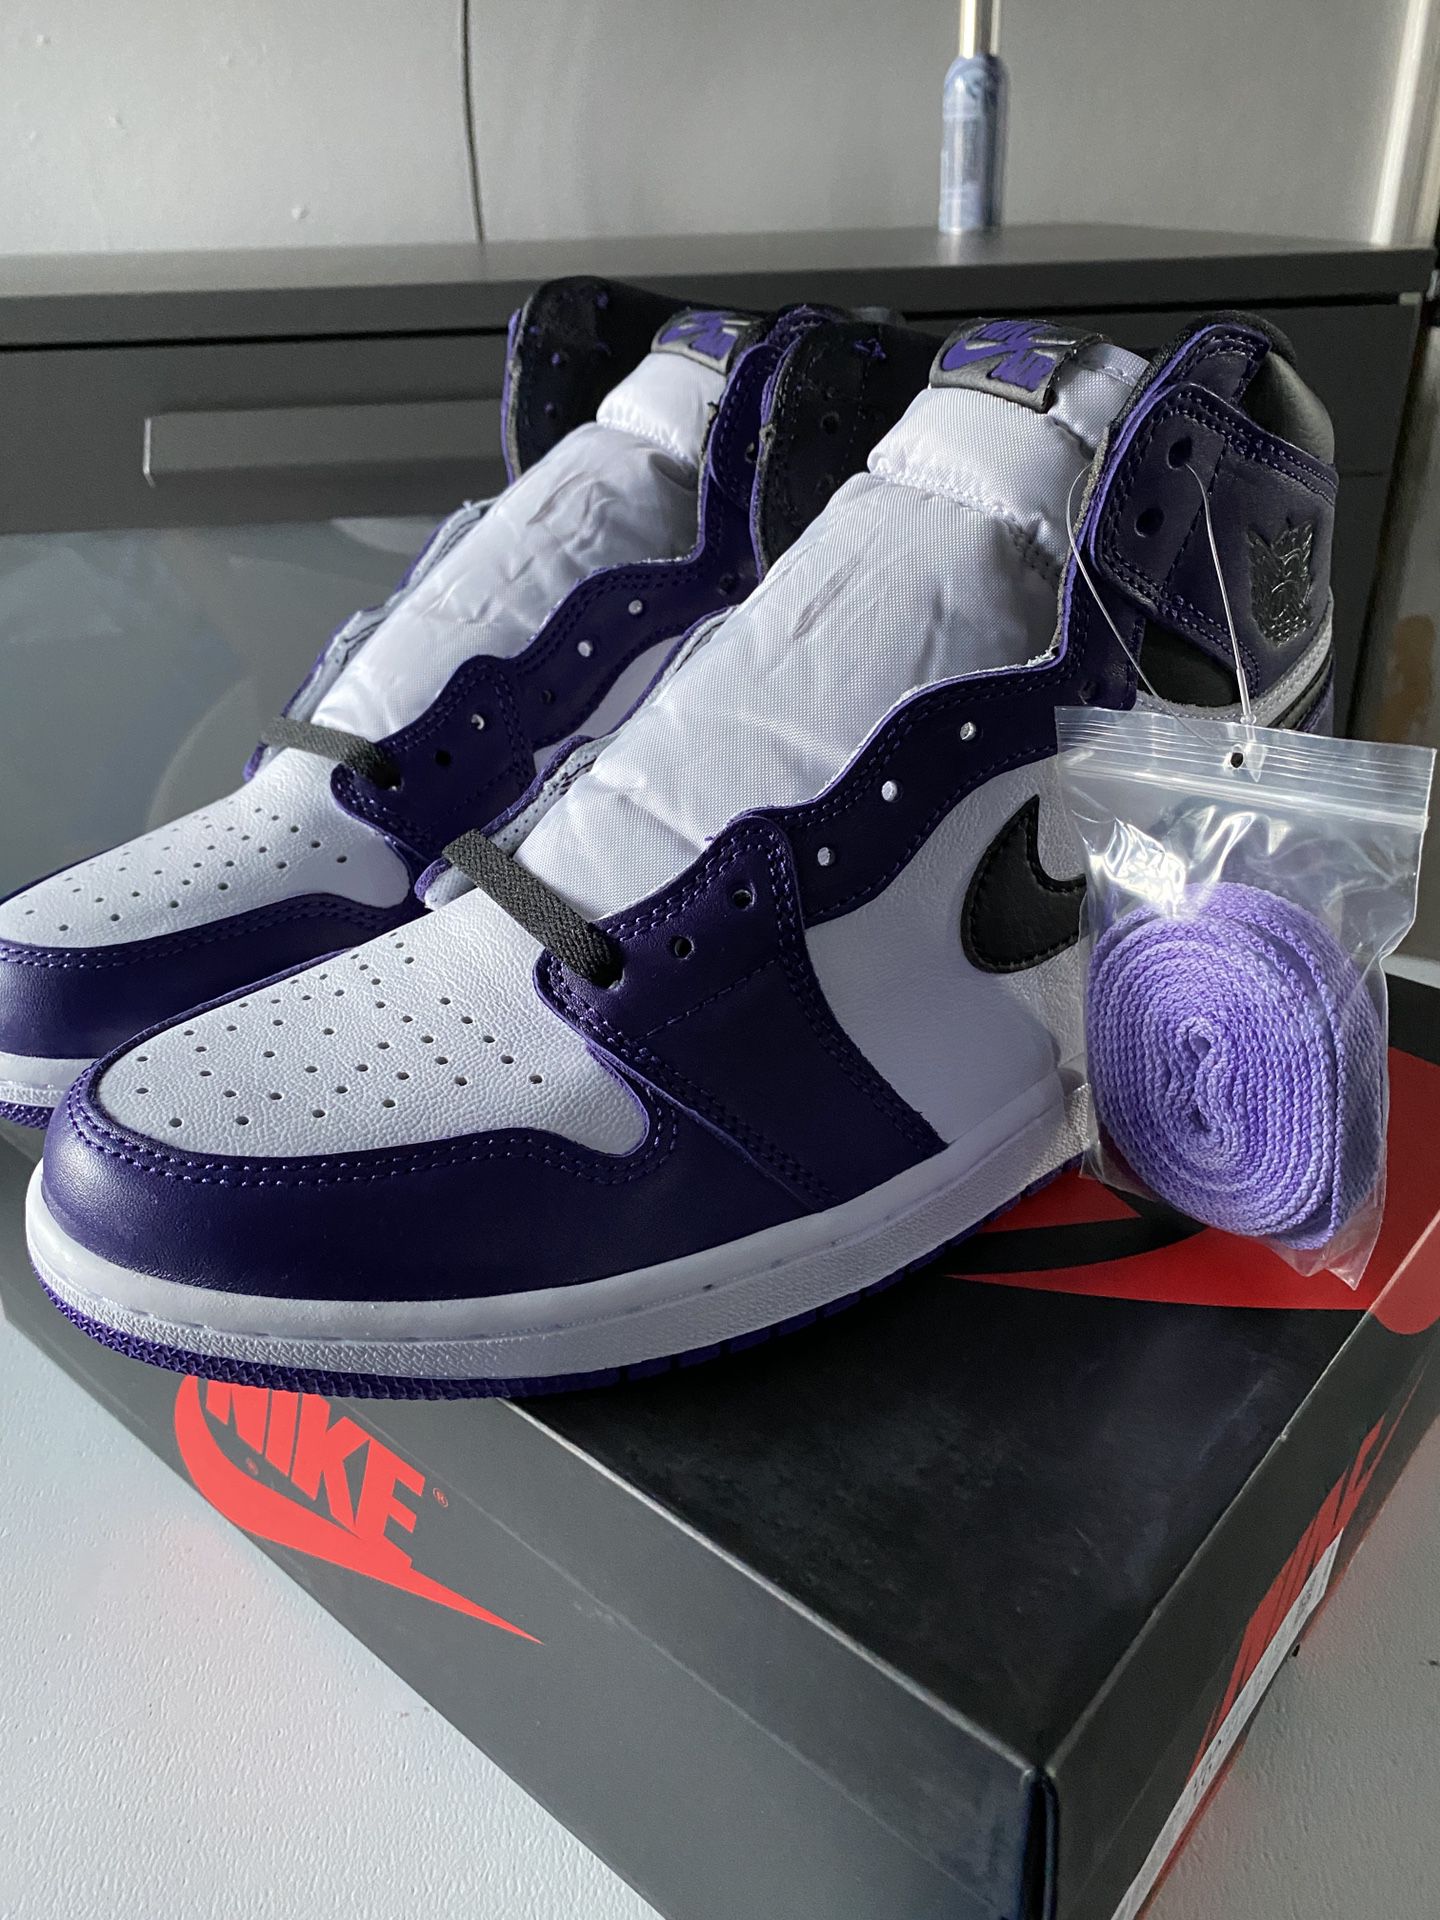 Jordan 1 Retro High OG “Purple Court 2.0” Size 10